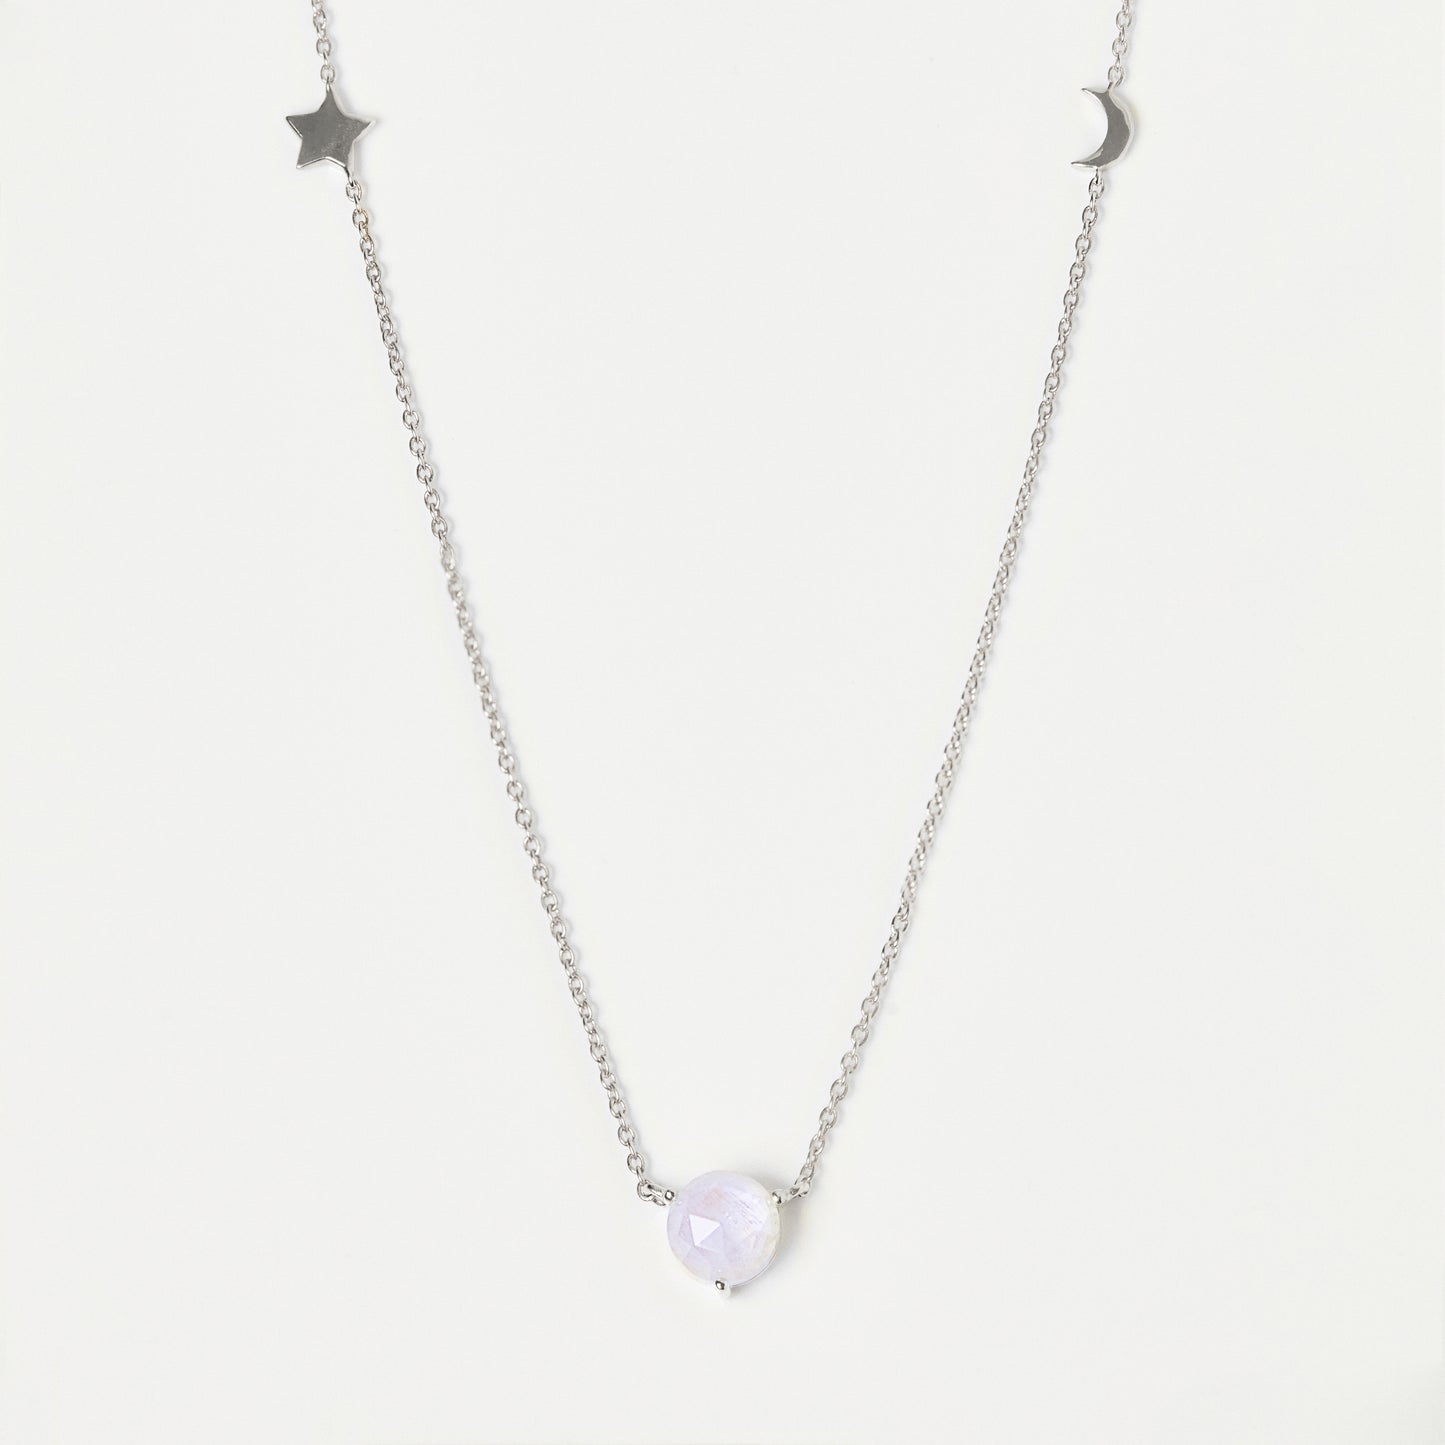 Dreamcatcher Necklace in Sterling Silver - Necklace - Carrie Elizabeth